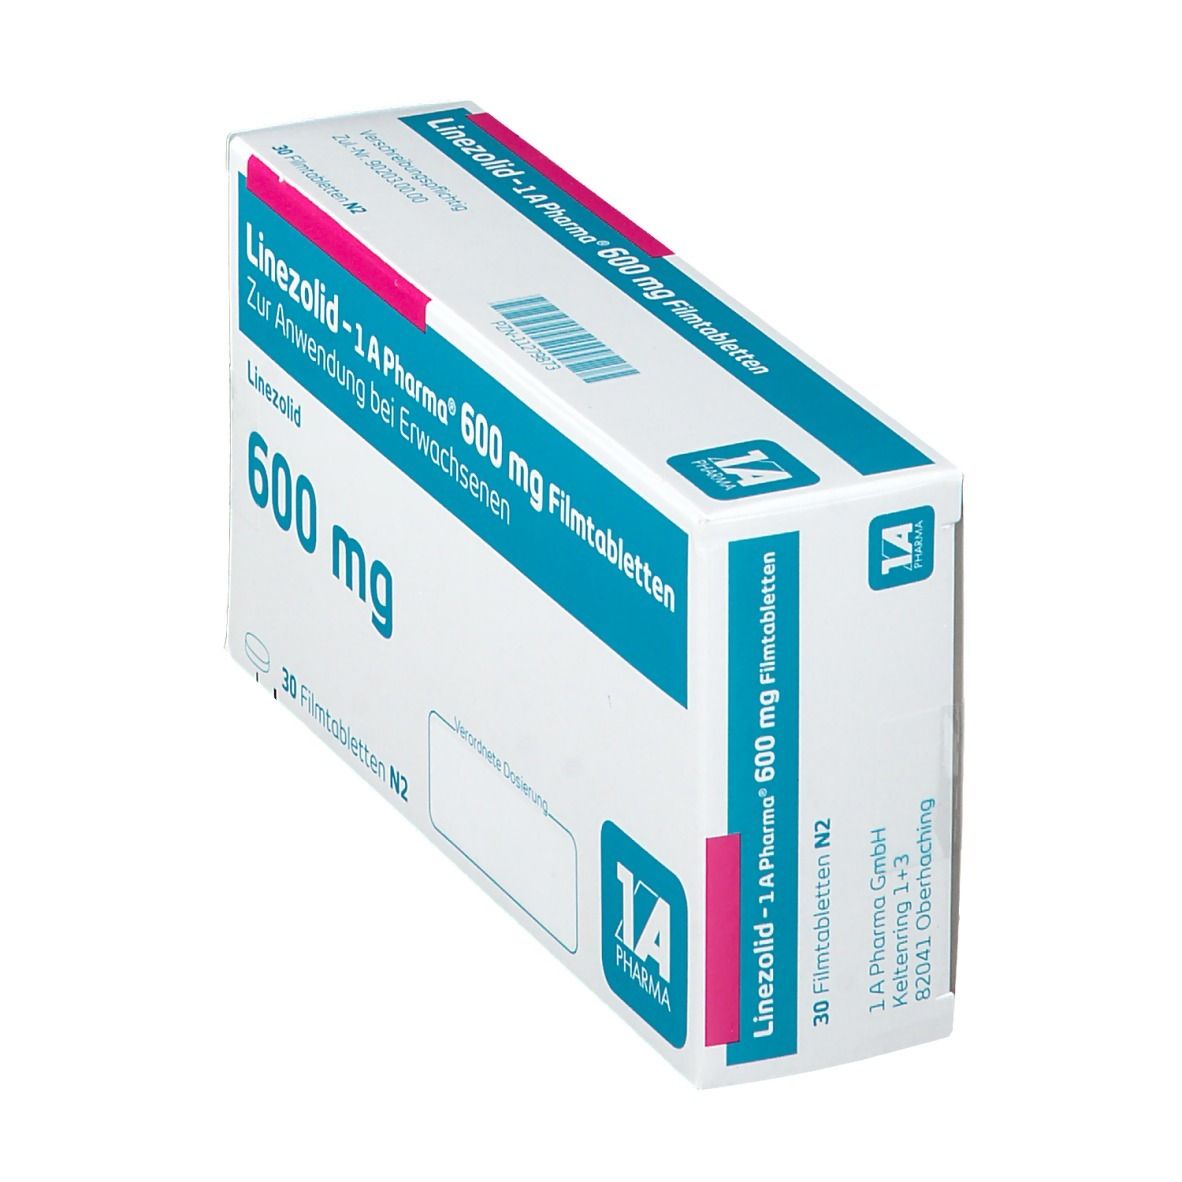 Linezolid - 1 A Pharma® 600 mg